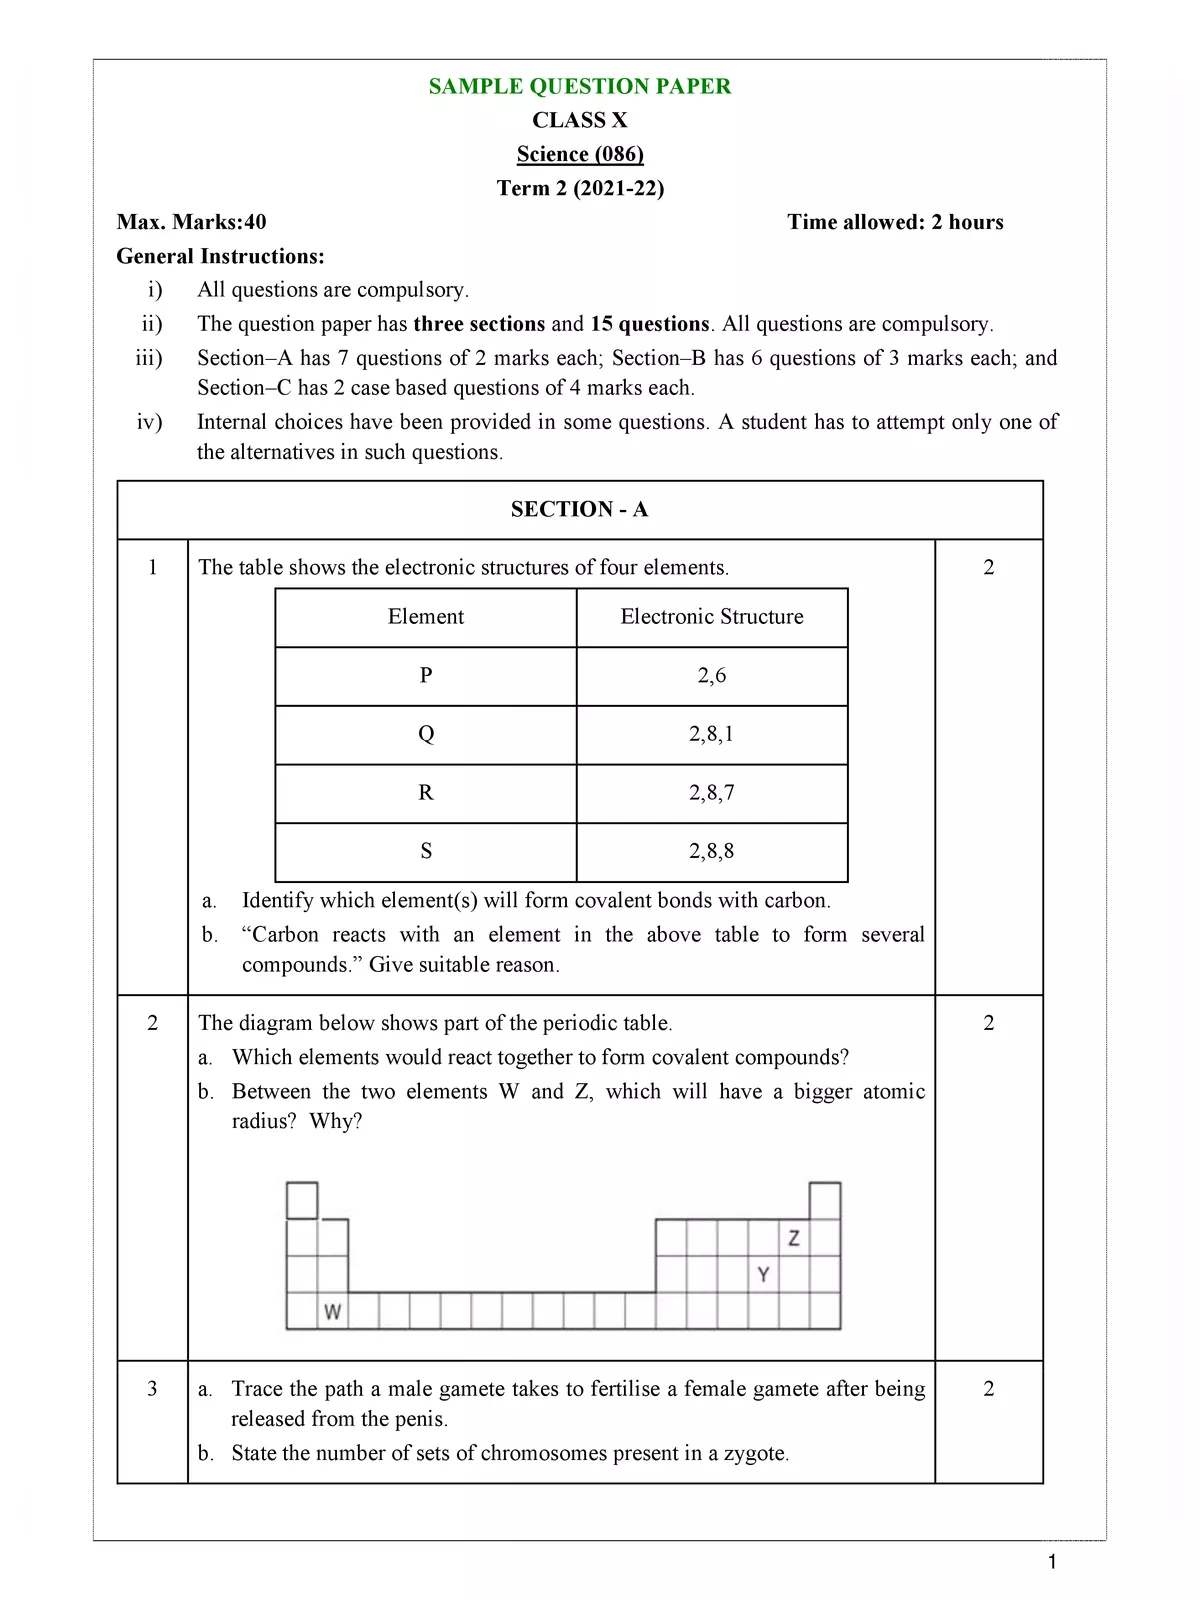 CBSE Sample Paper 2021-22 Class 10